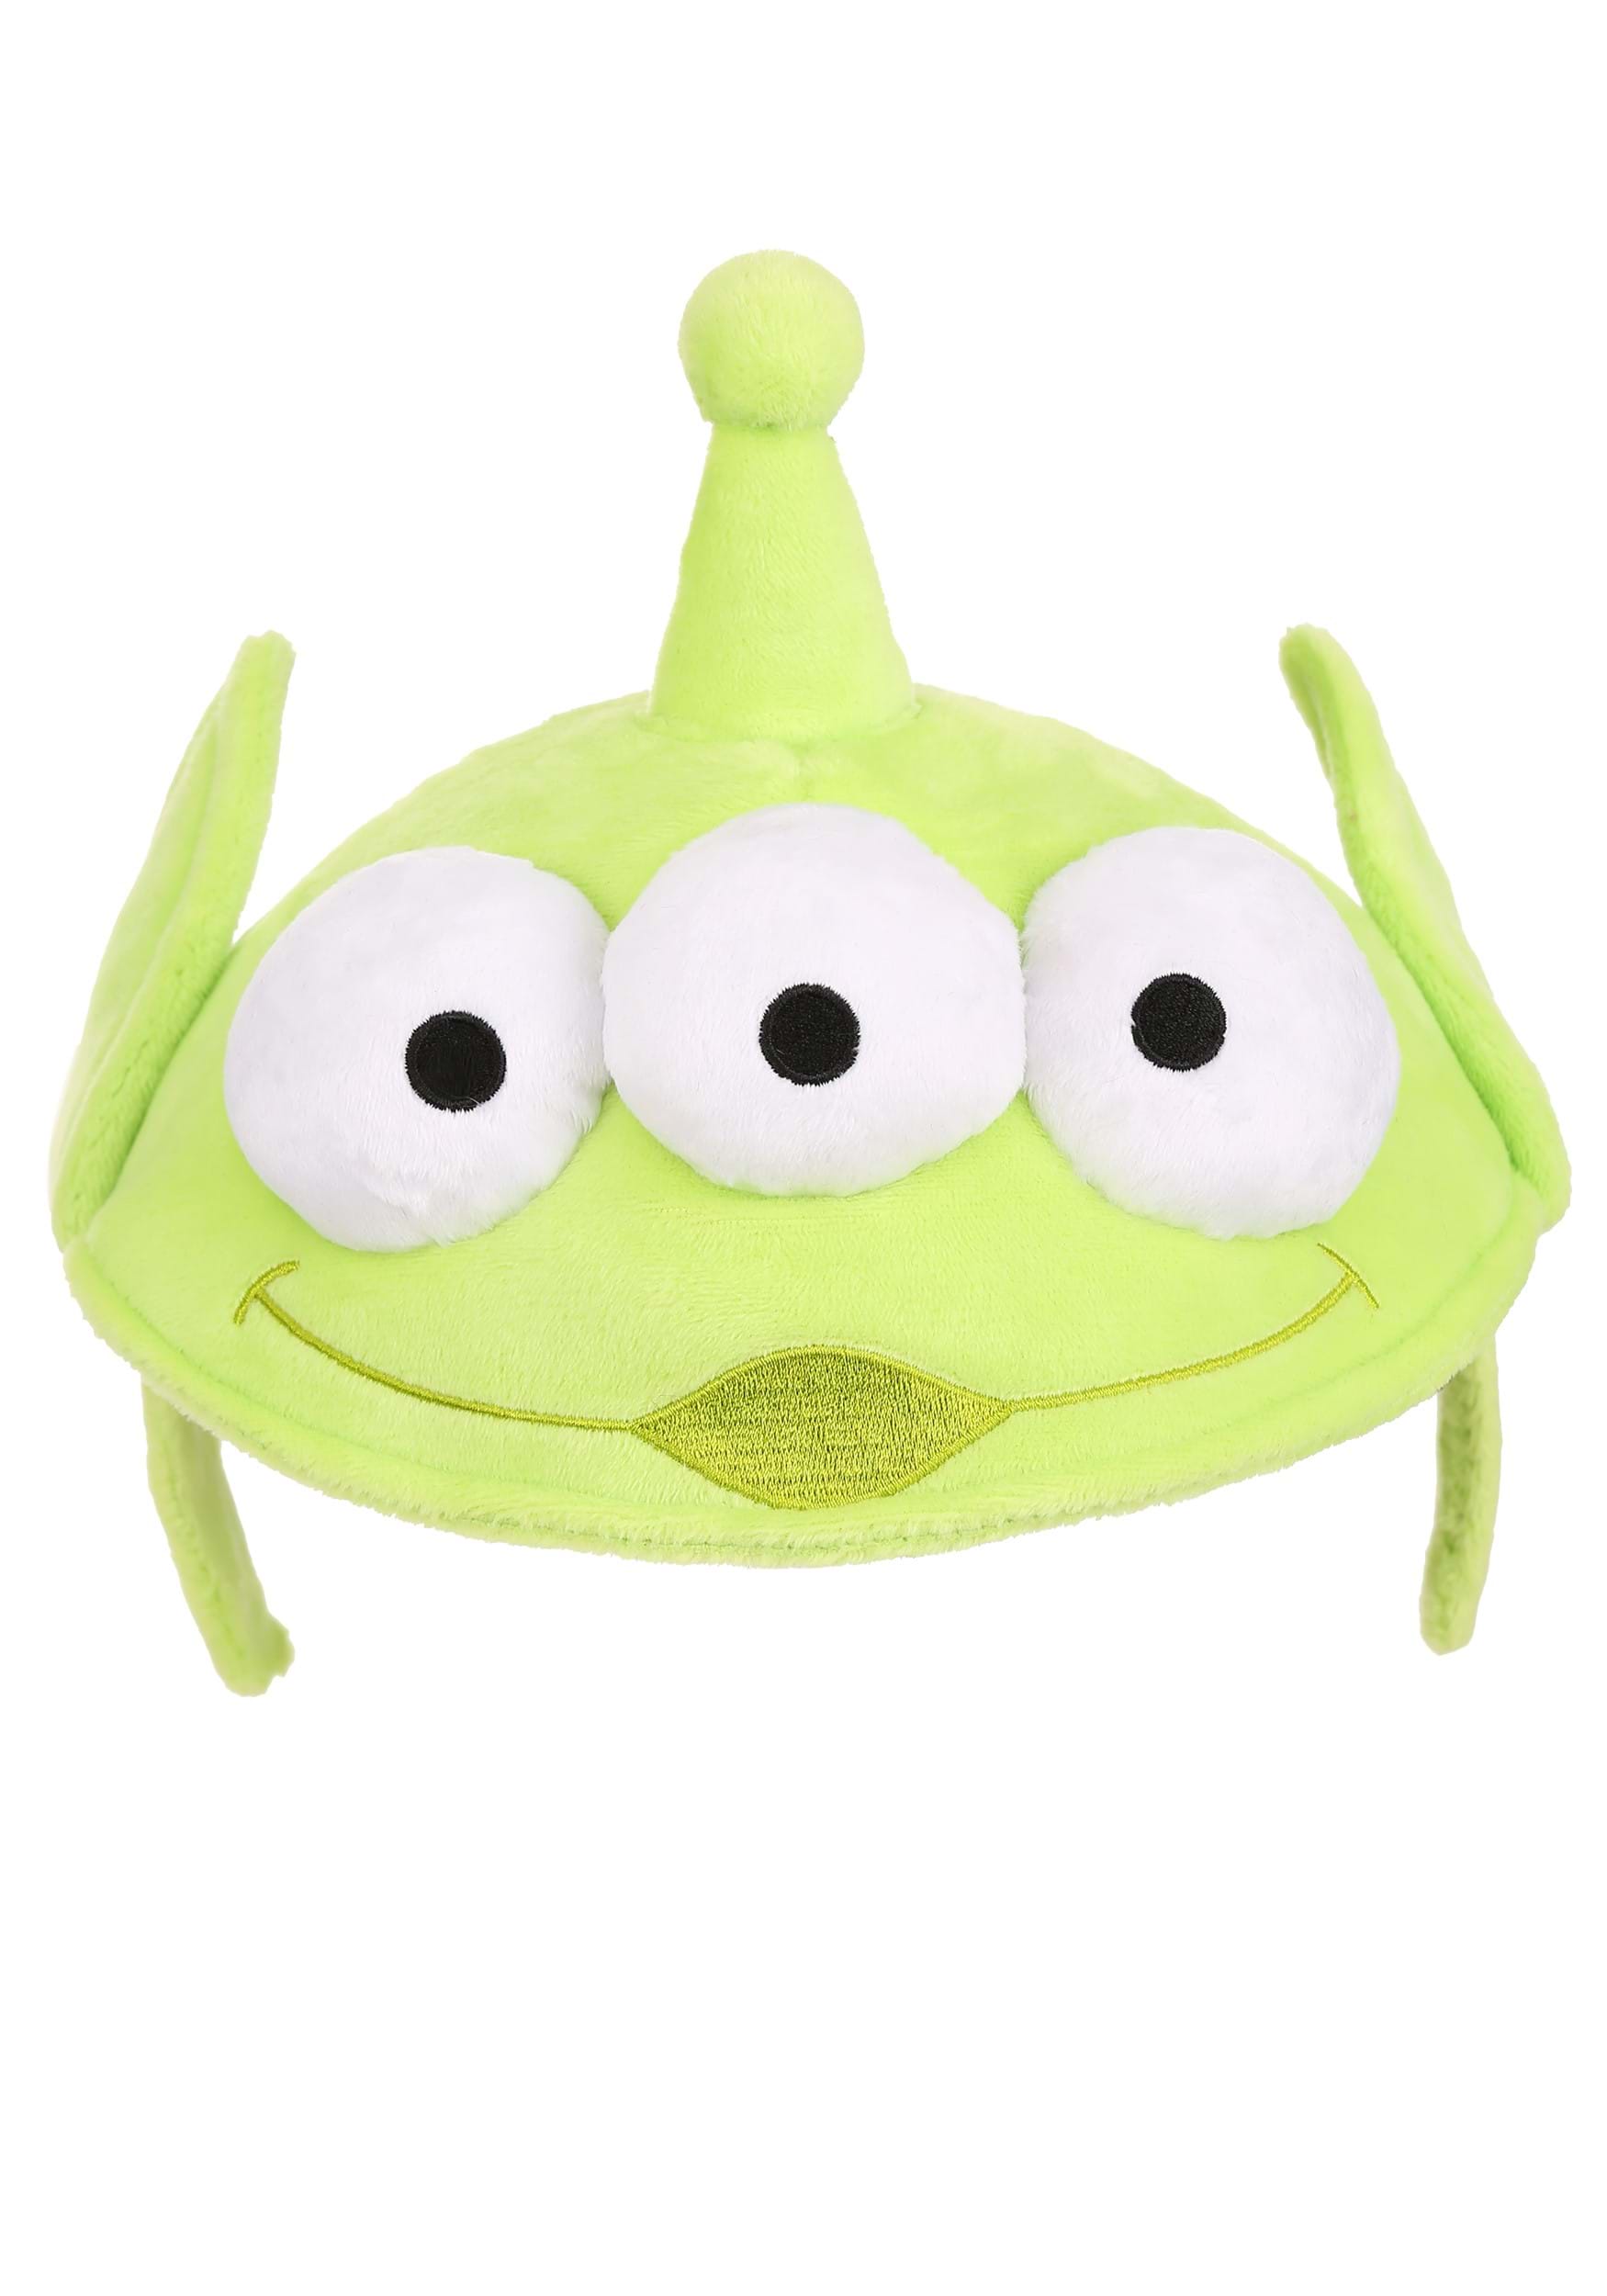 Toy Story: Alien Headband Costume | Toy Story Alien Hats